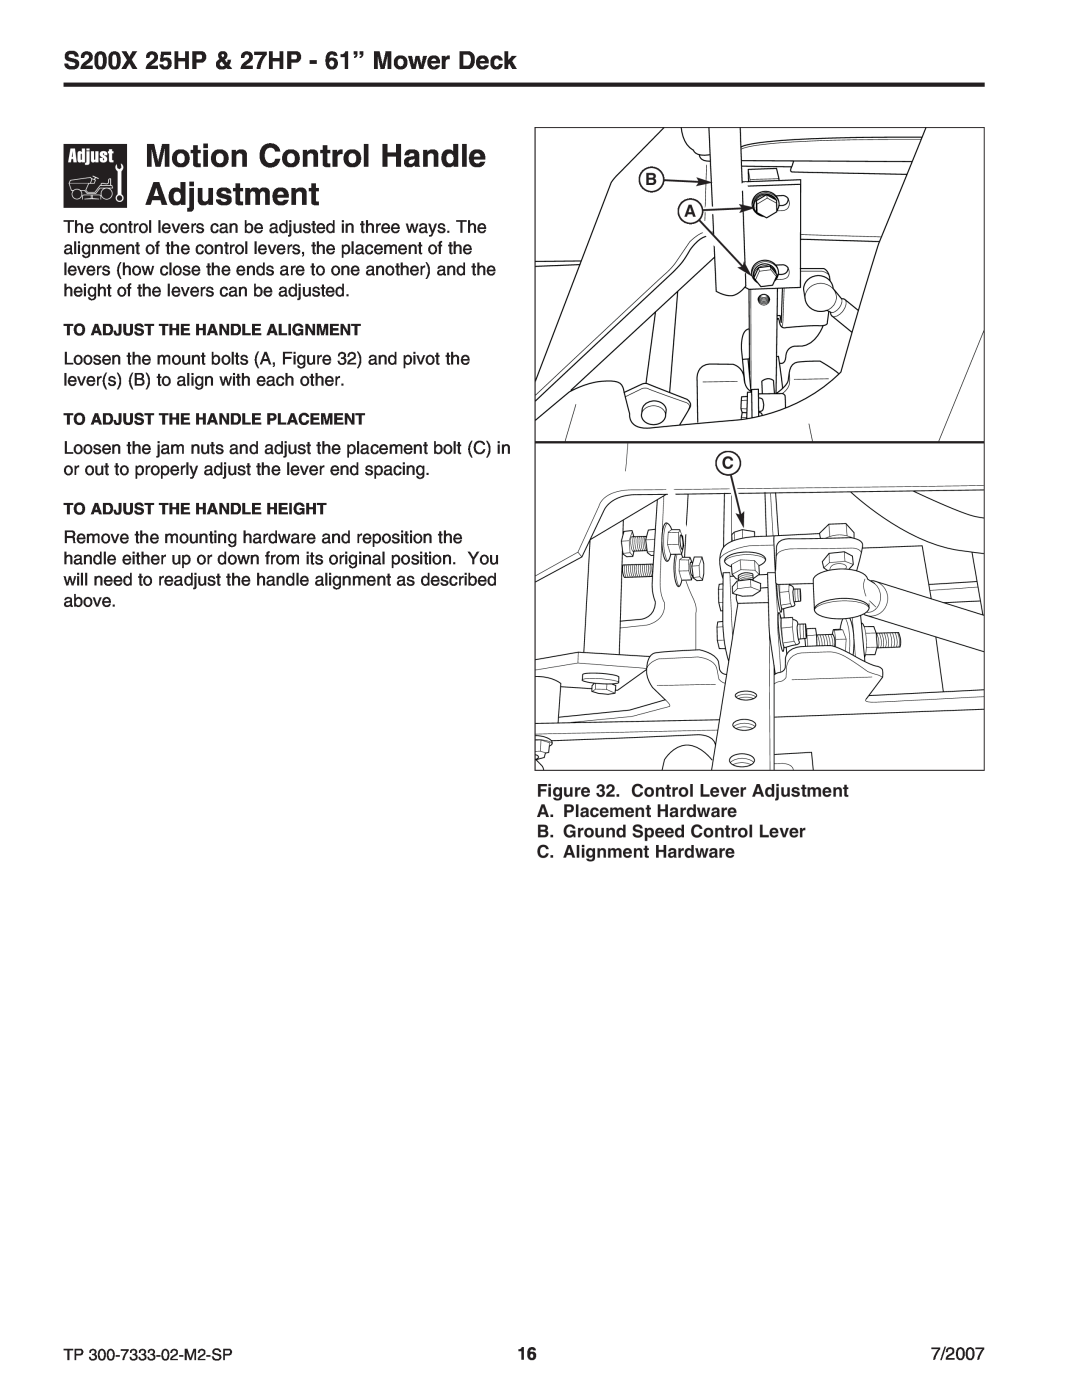 Briggs & Stratton 5900692, 5900664 manual Motion Control Handle Adjustment, S200X 25HP & 27HP - 61” Mower Deck 